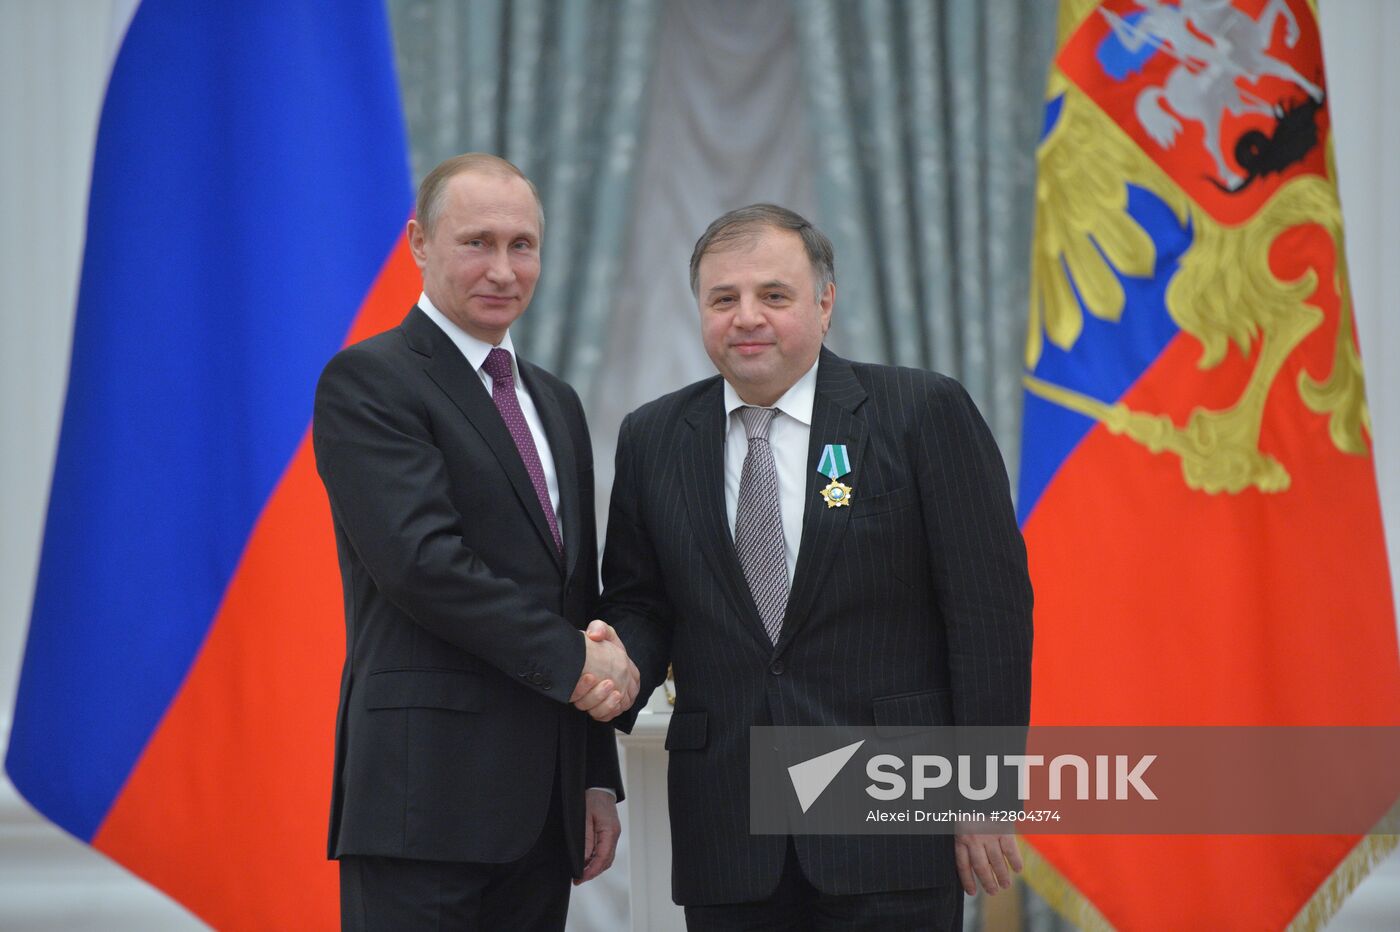 President Vladimir Putin gives government awards in Kremlin